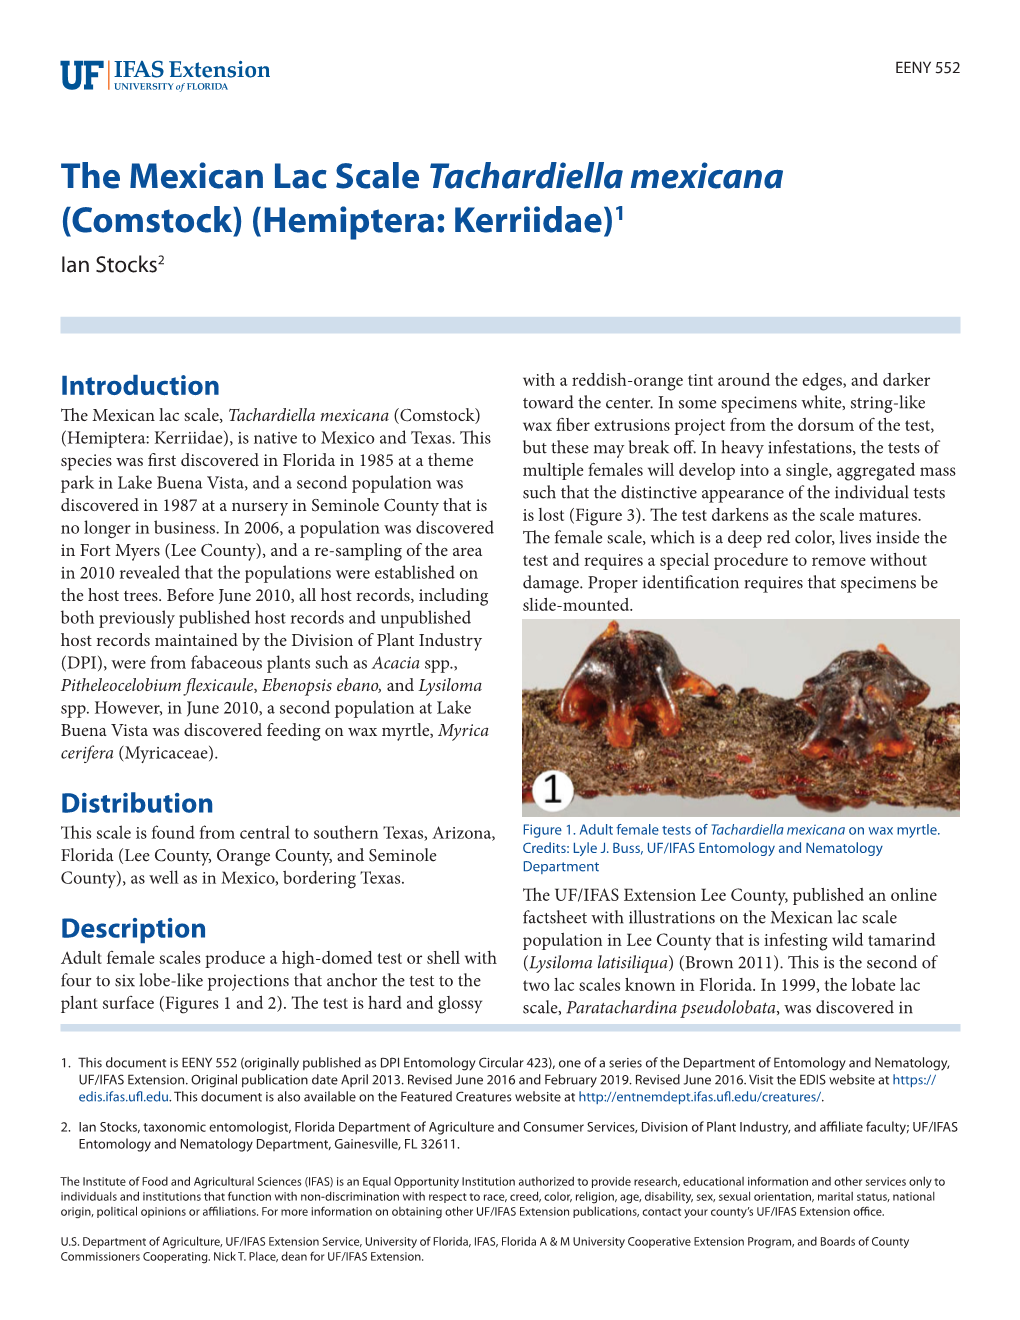 The Mexican Lac Scale Tachardiella Mexicana (Comstock) (Hemiptera: Kerriidae)1 Ian Stocks2